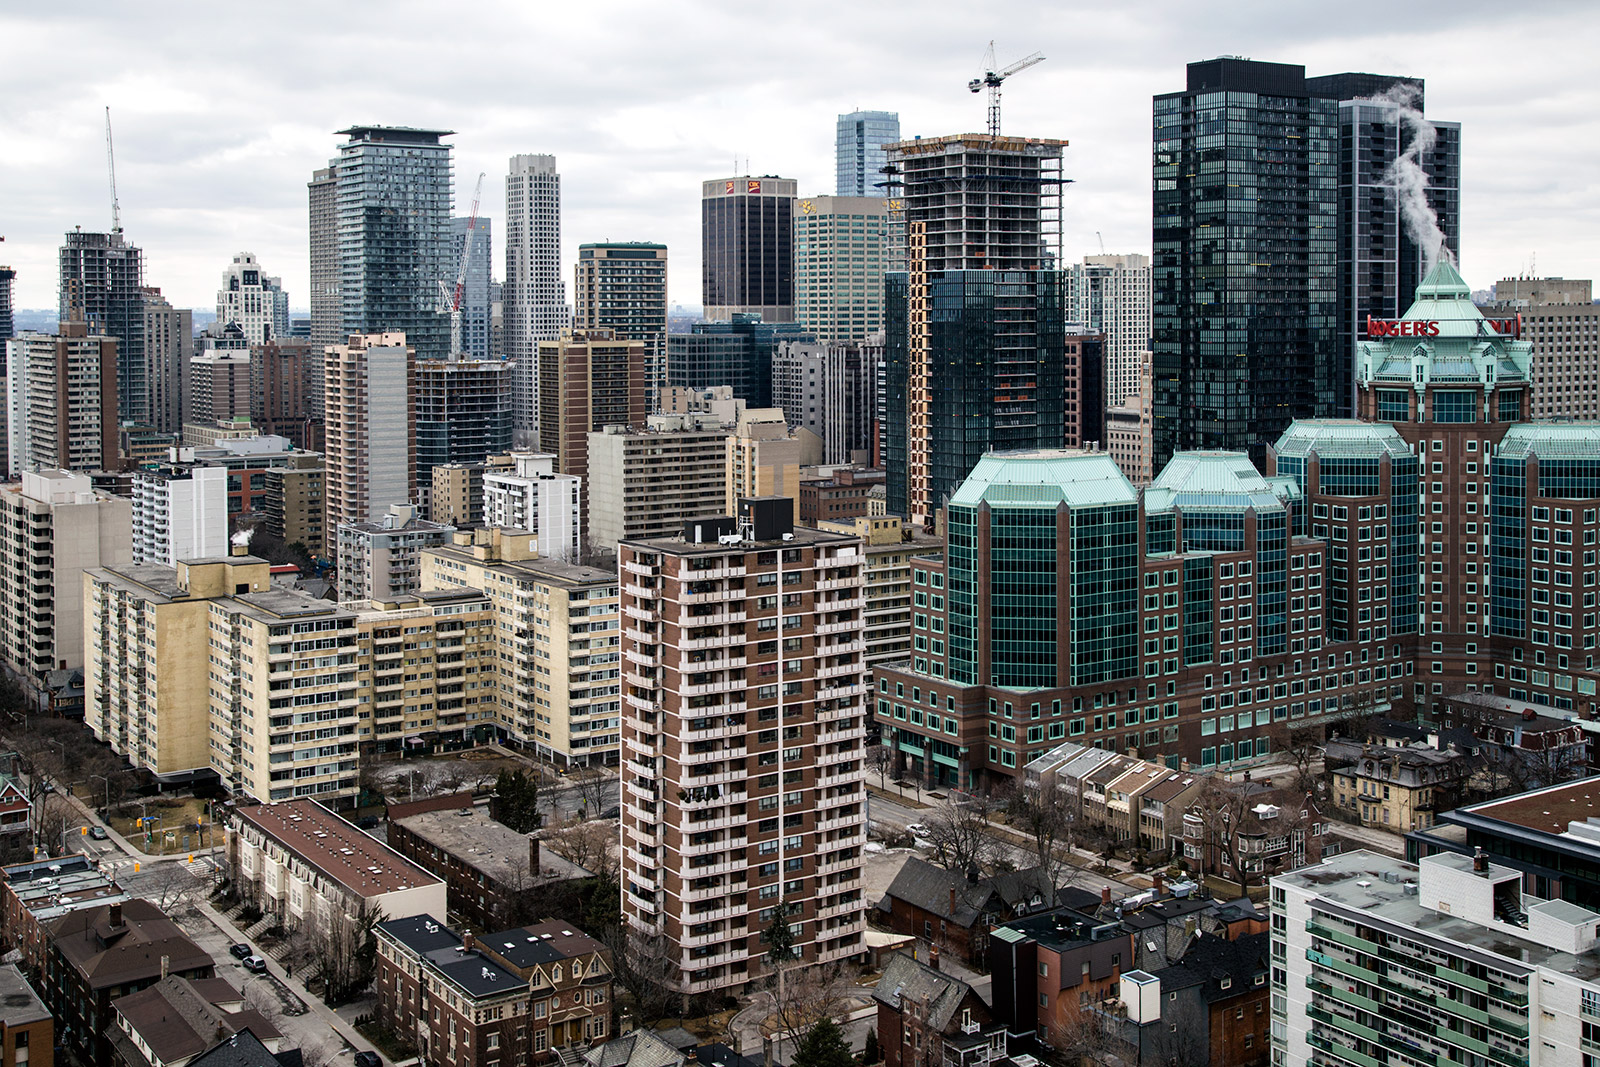 20141013. Looking NW across Toronto. Beyond the modern residenti